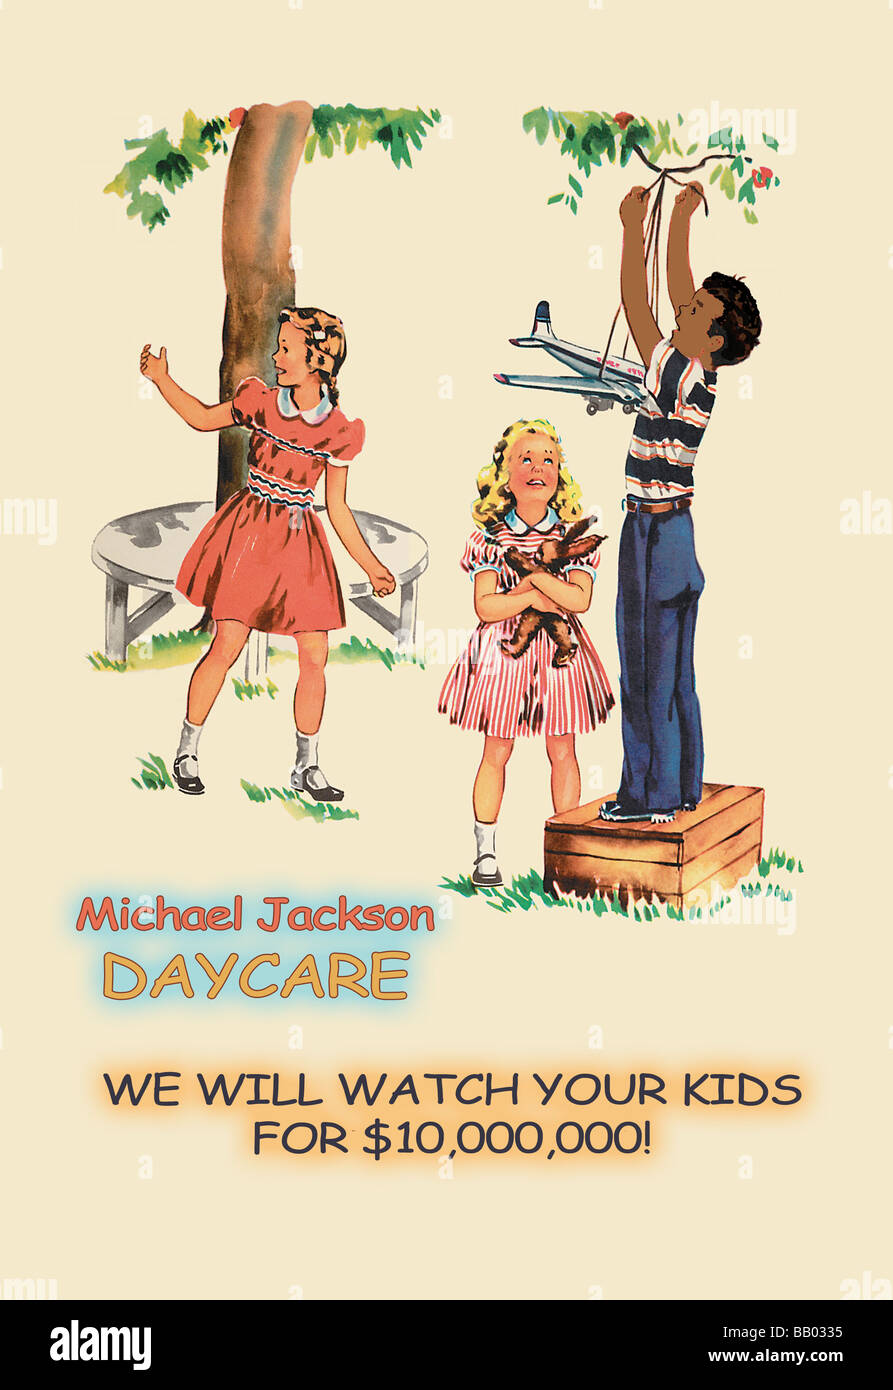 Michael Jackson Daycare Stock Photo